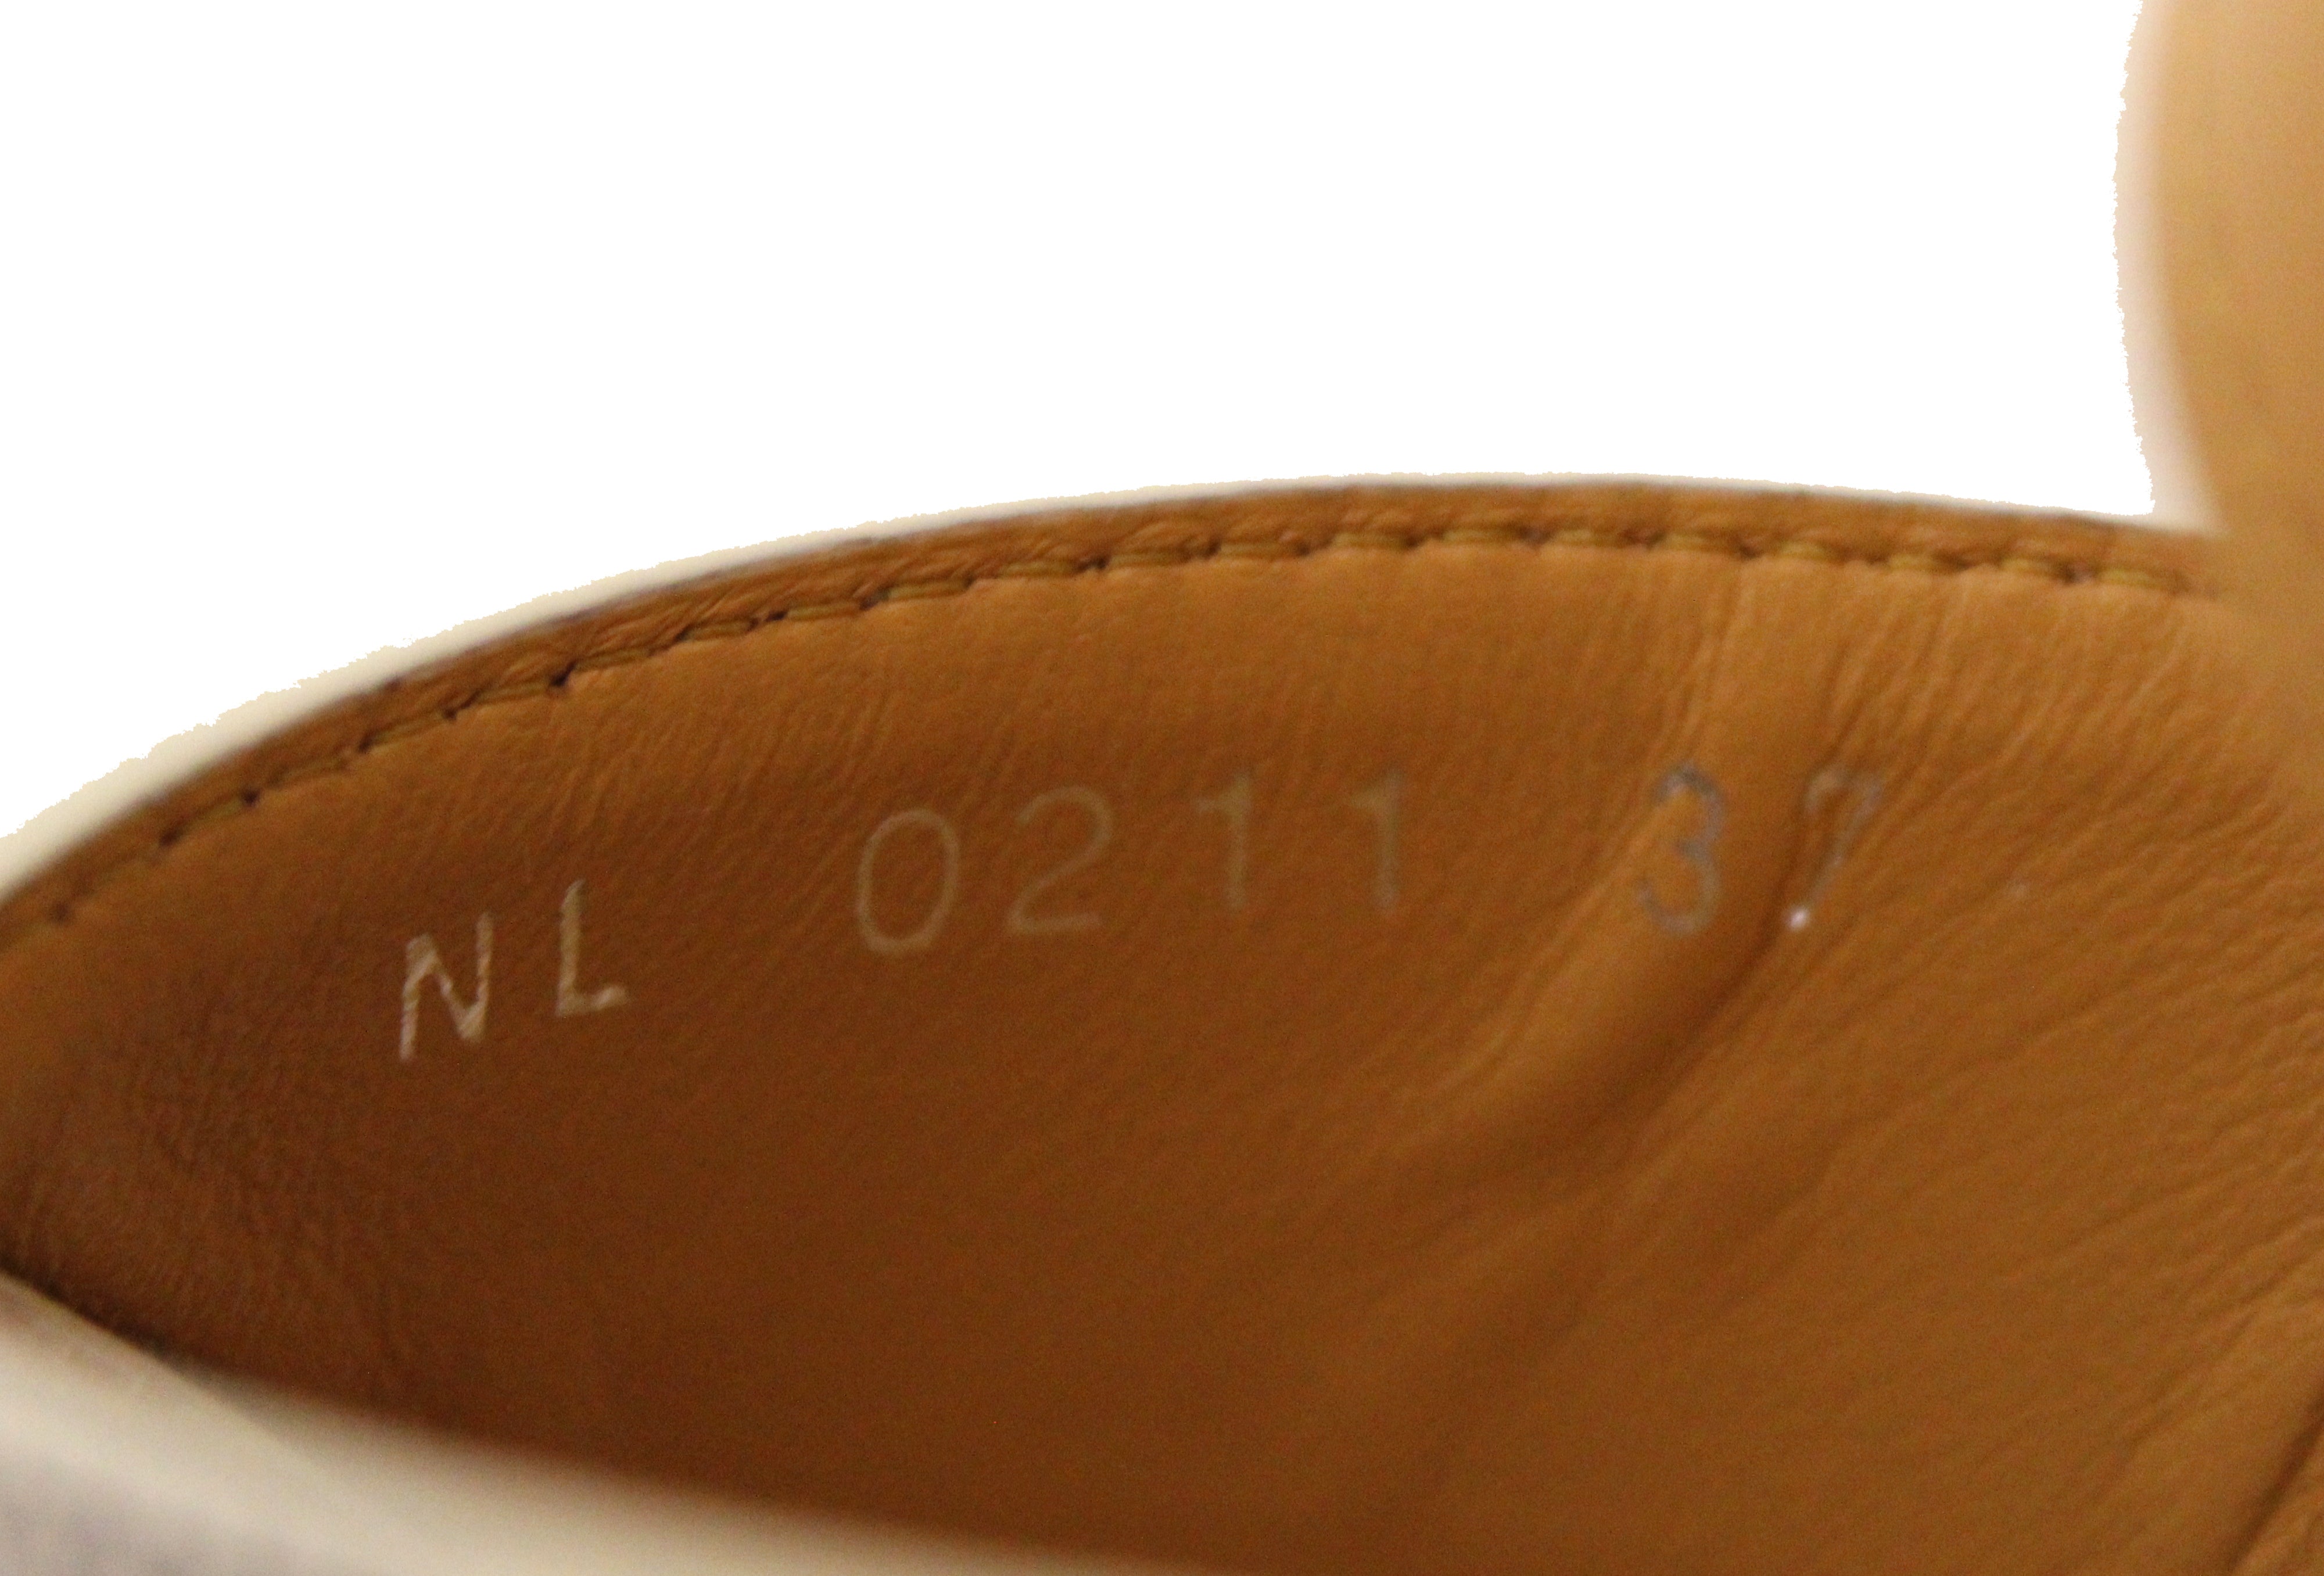 Authentic Louis Vuitton Damier Azur Starboard Wedge Sandal